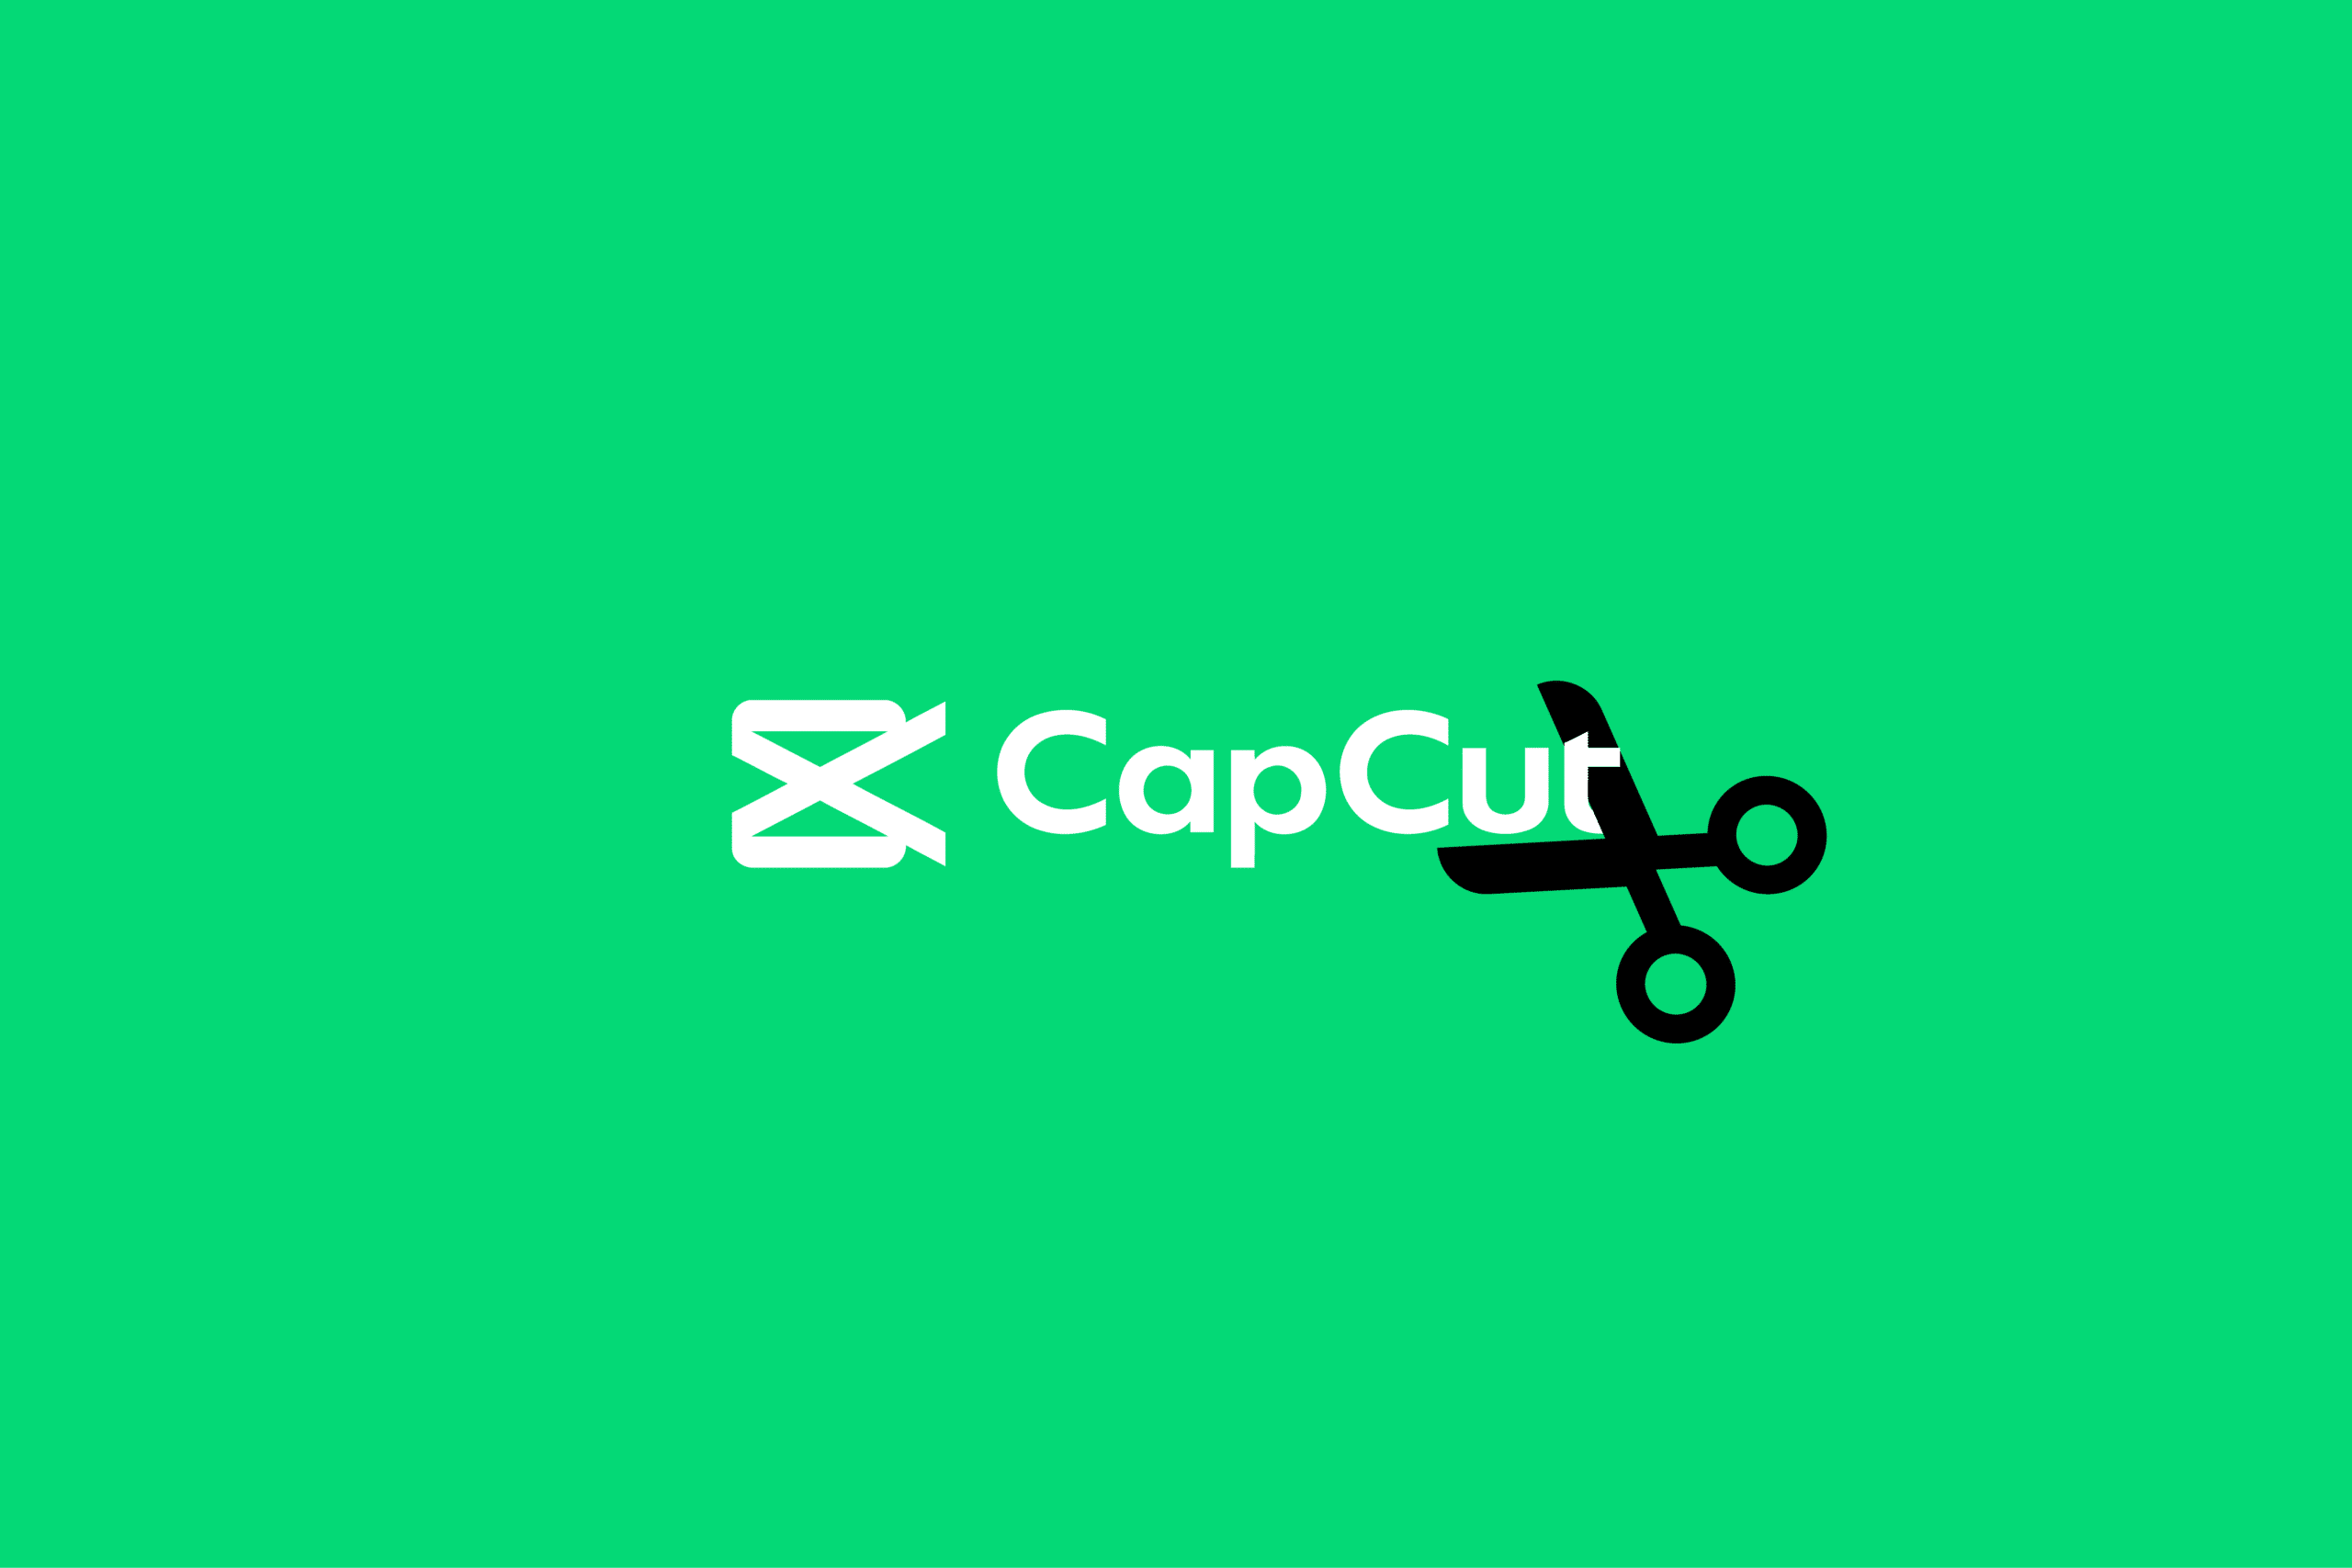 How to Edit in CapCut